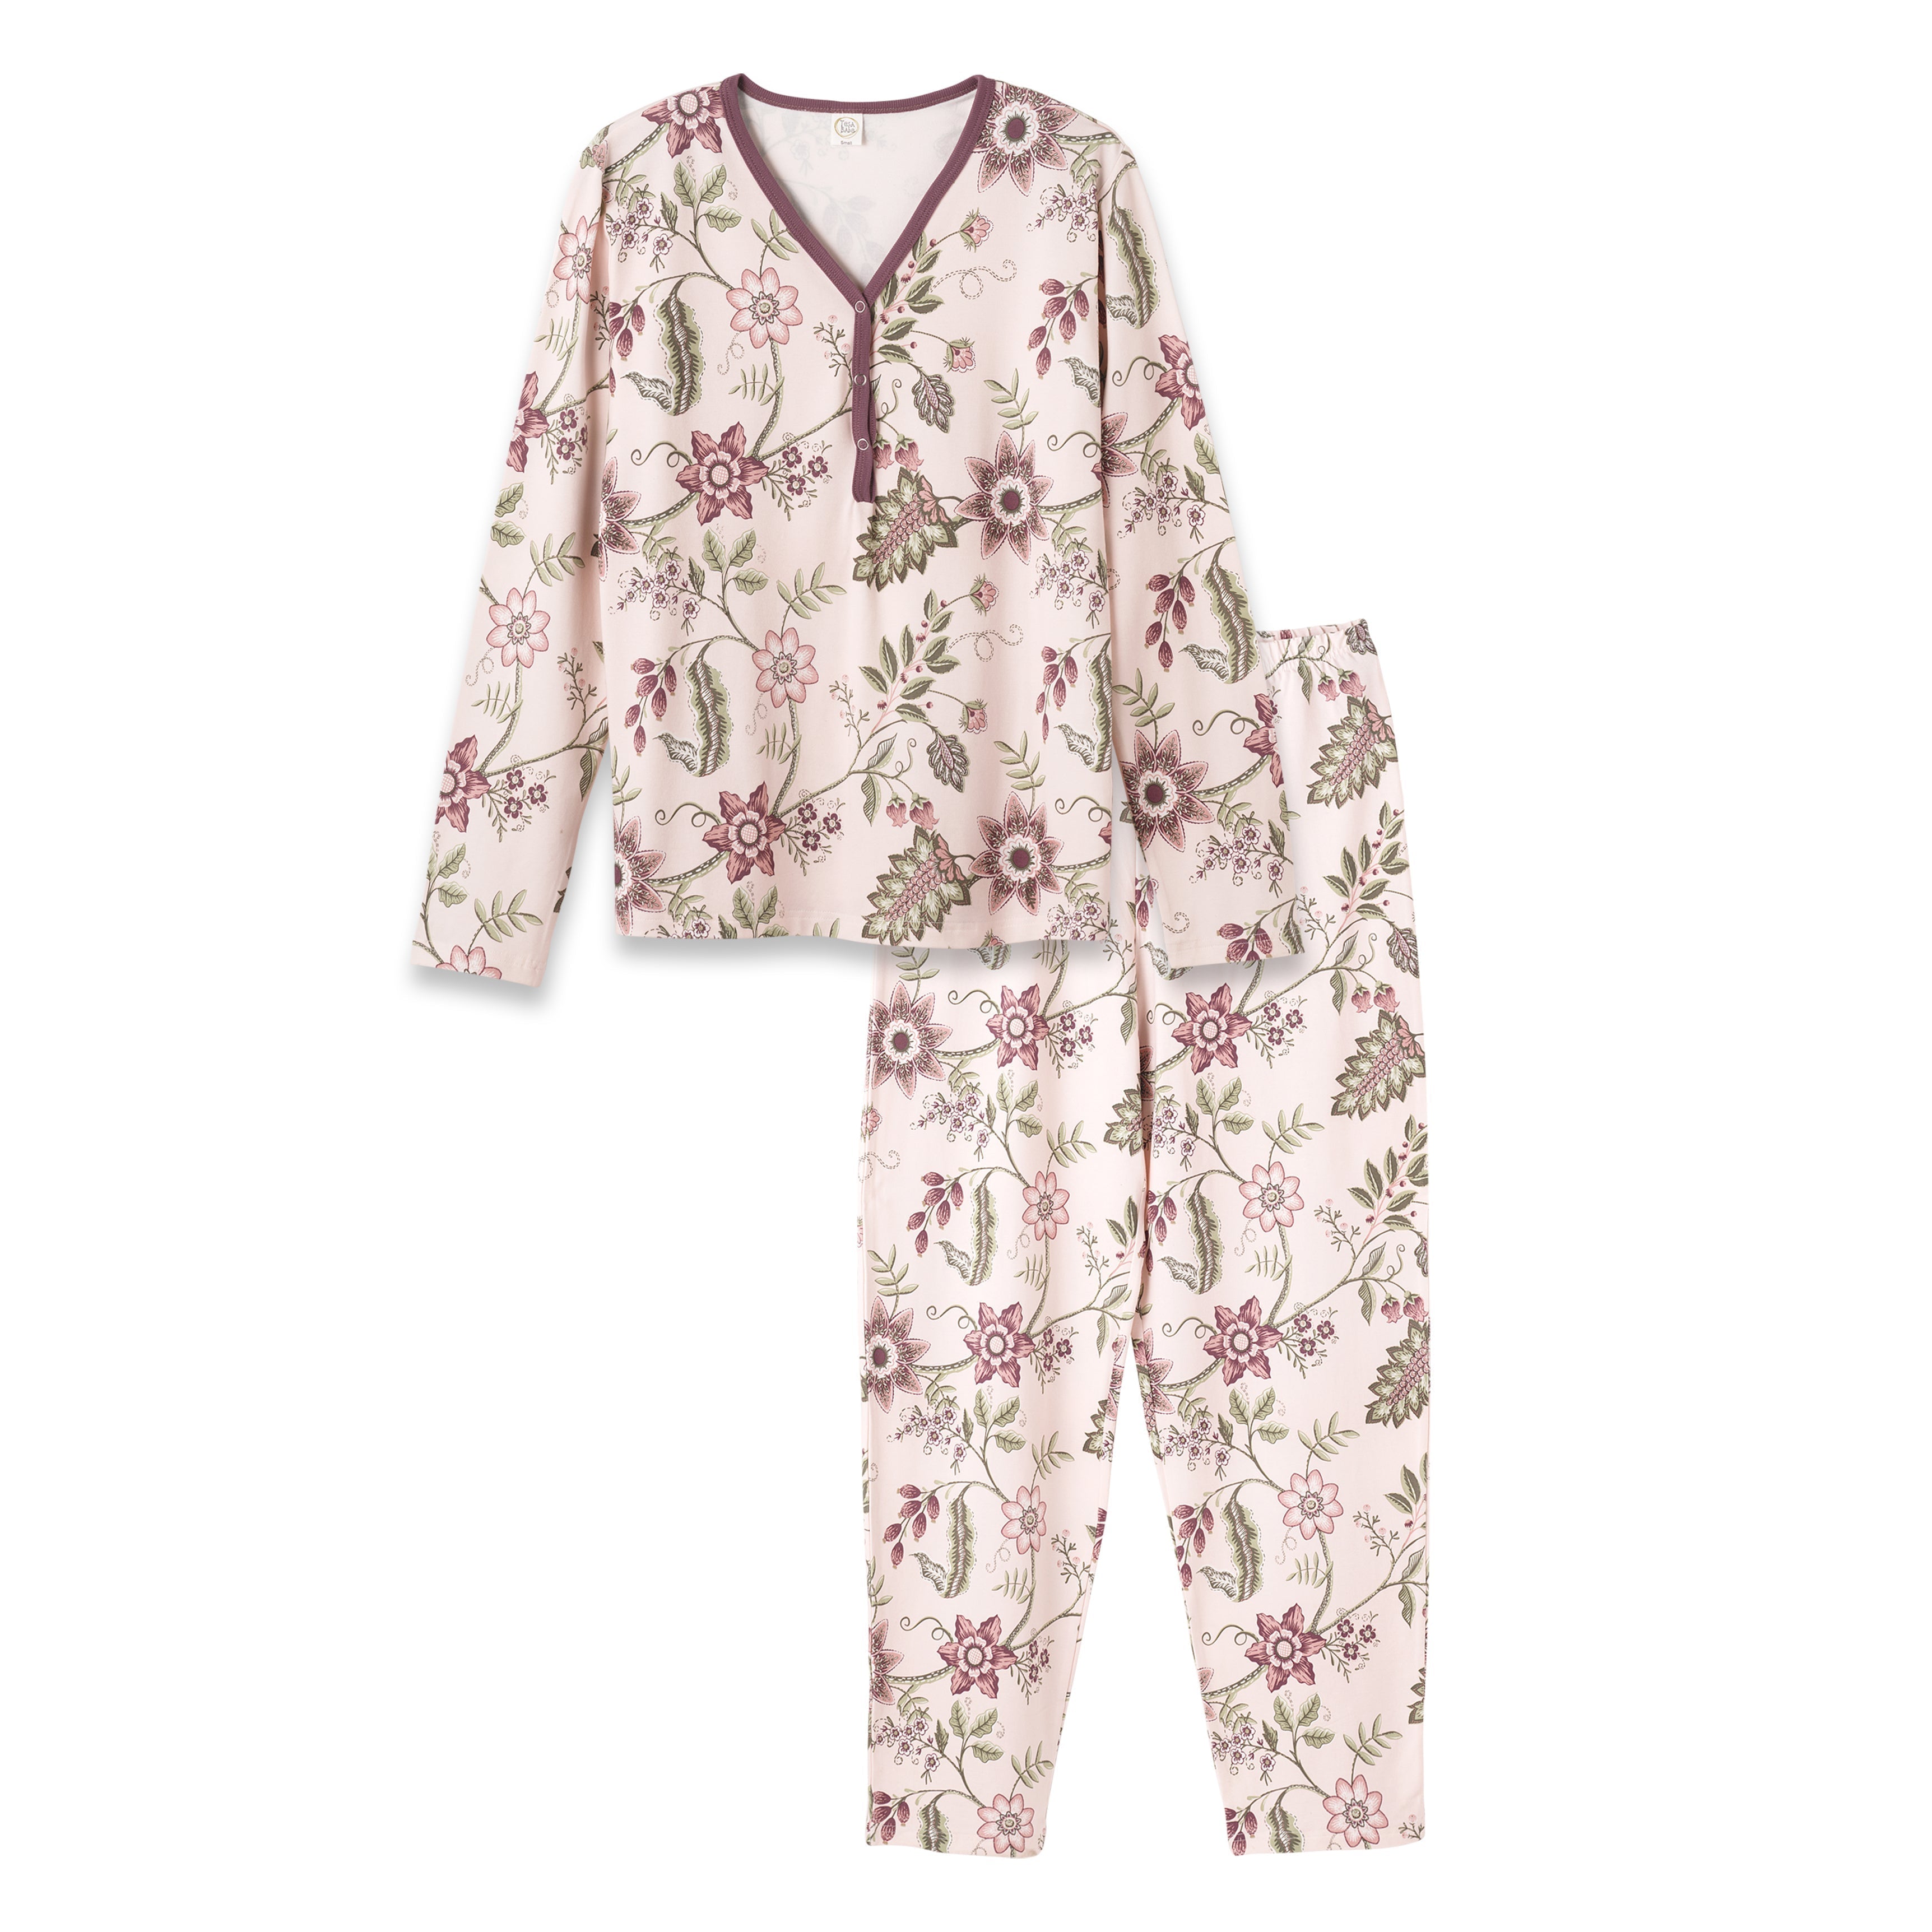 Floral Stitchery Women's Pajama Set